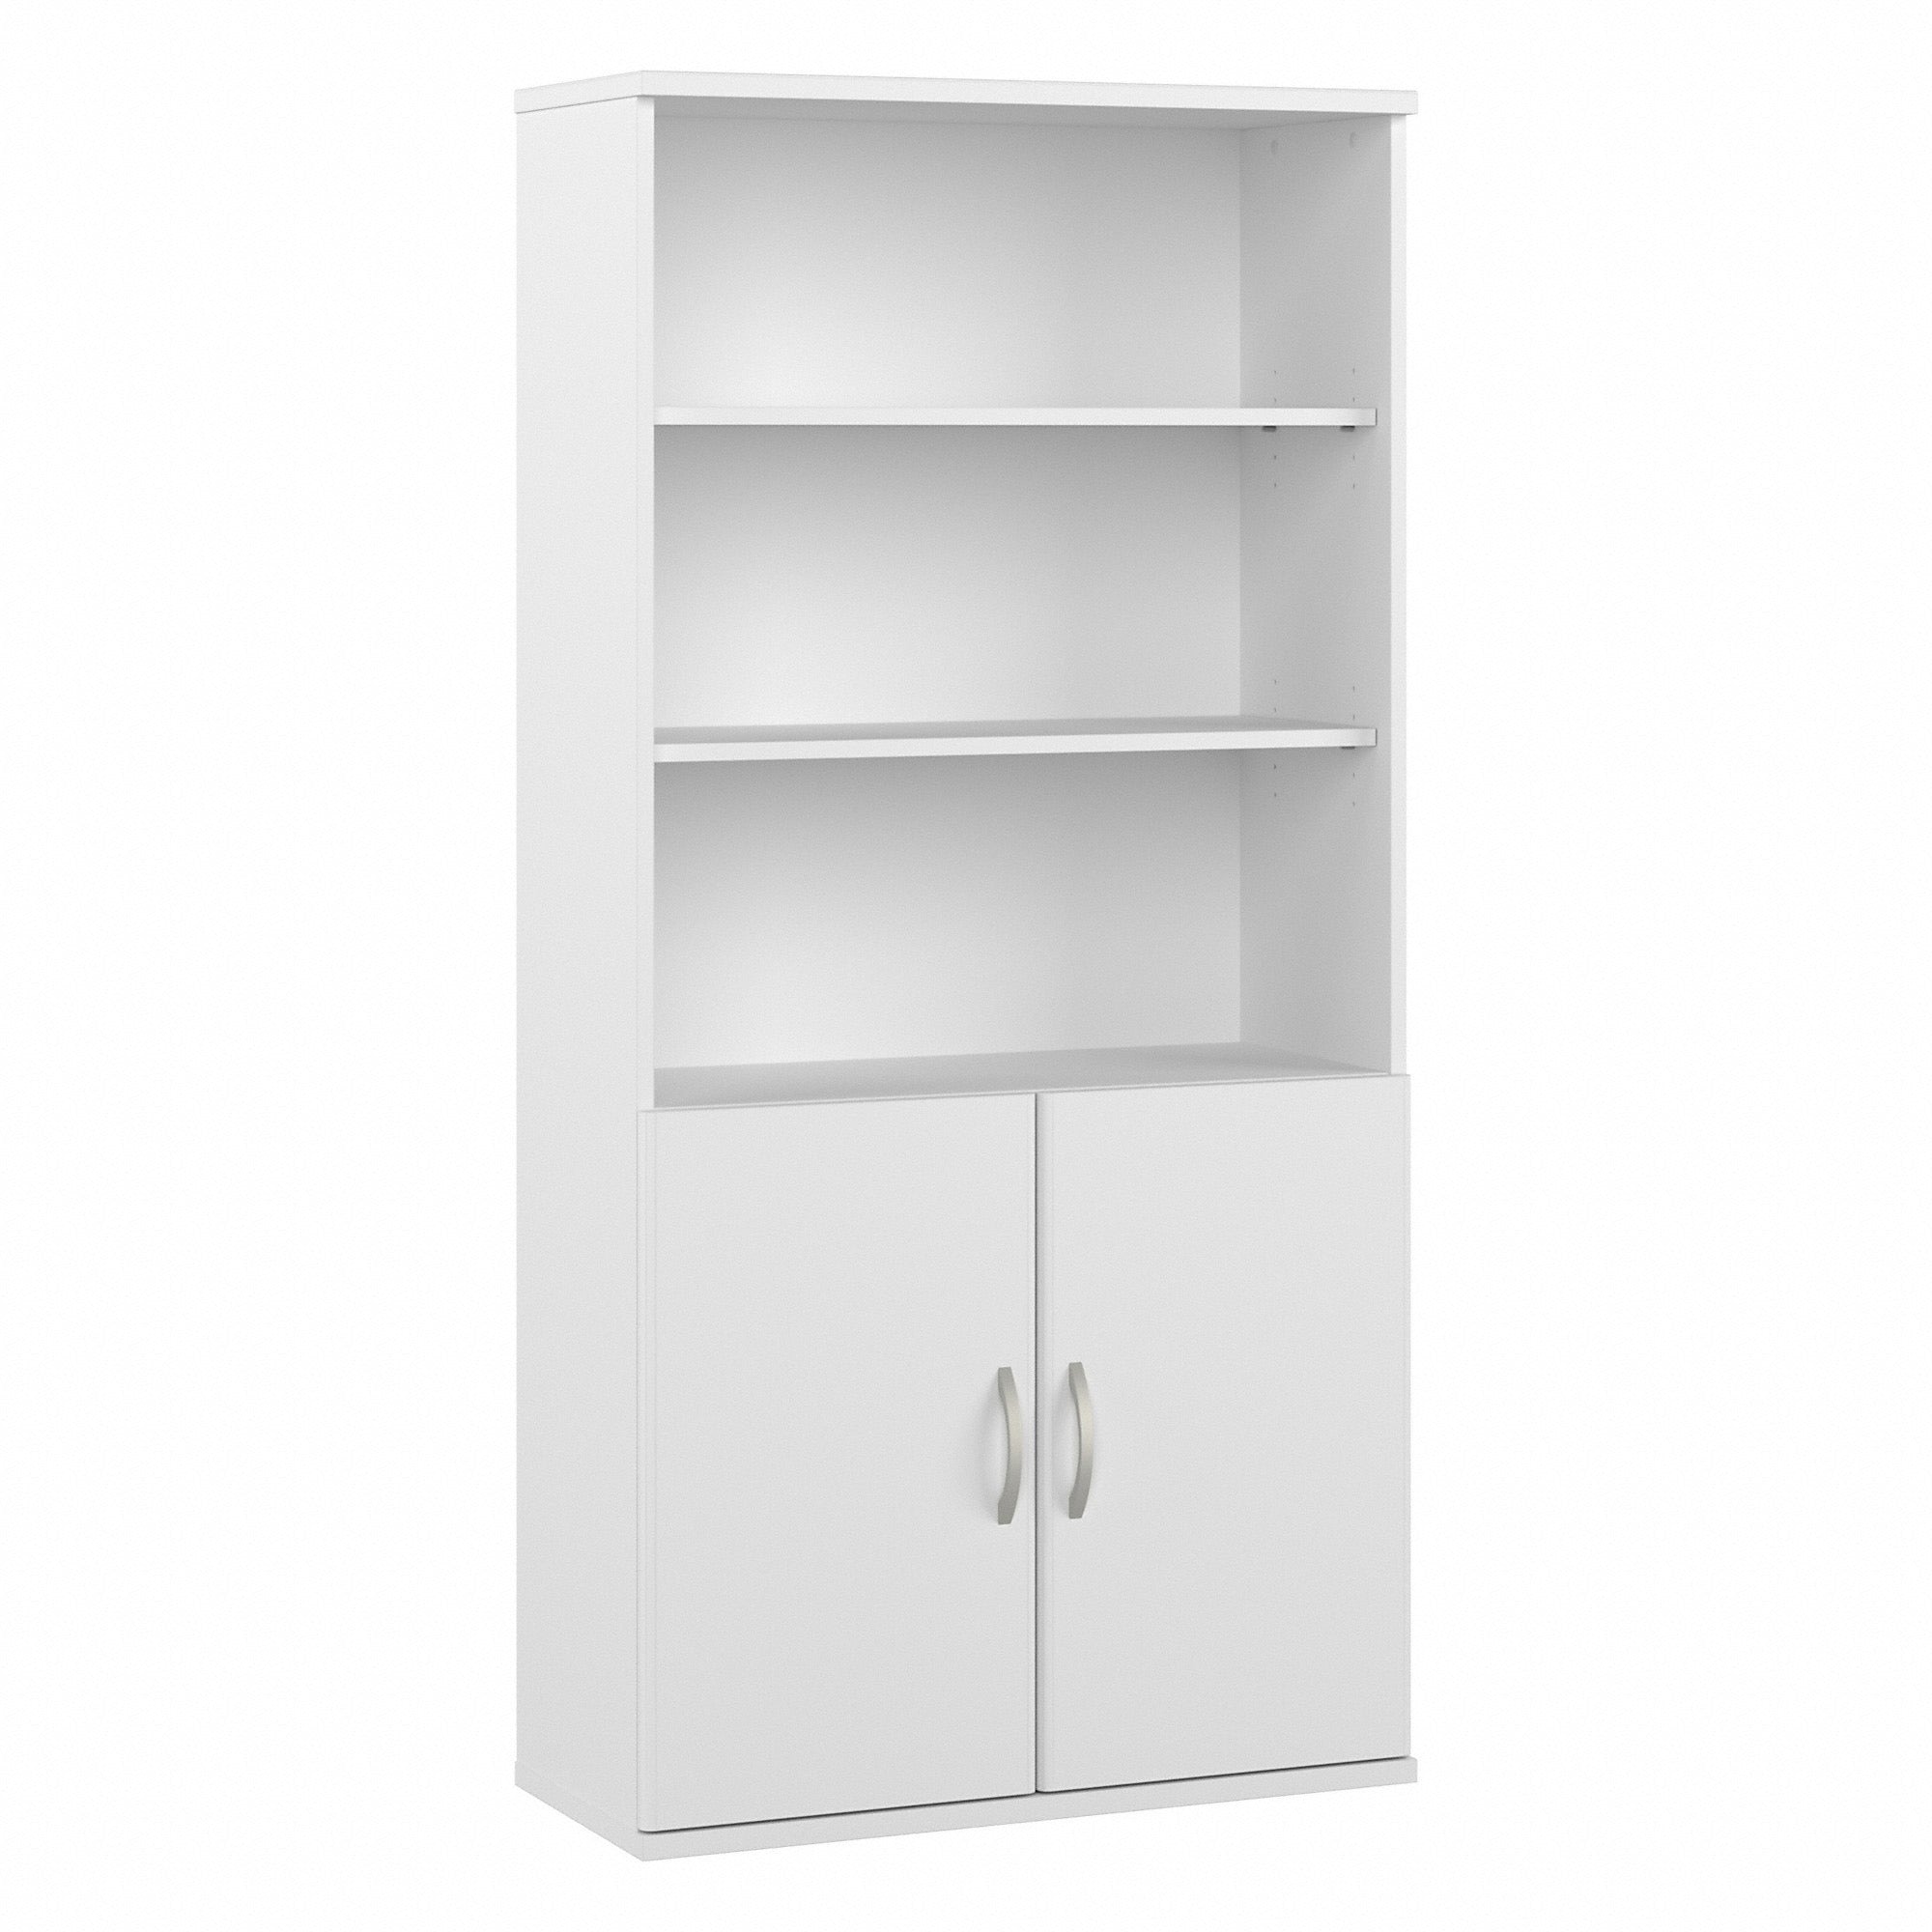 Bush Business Furniture Studio A White Desking Unit - 35.7" x 16.2"72.8" - 2 Door(s) - 5 Shelve(s) - 3 Adjustable Shelf(ves) - Finish: White, Laminate - 1